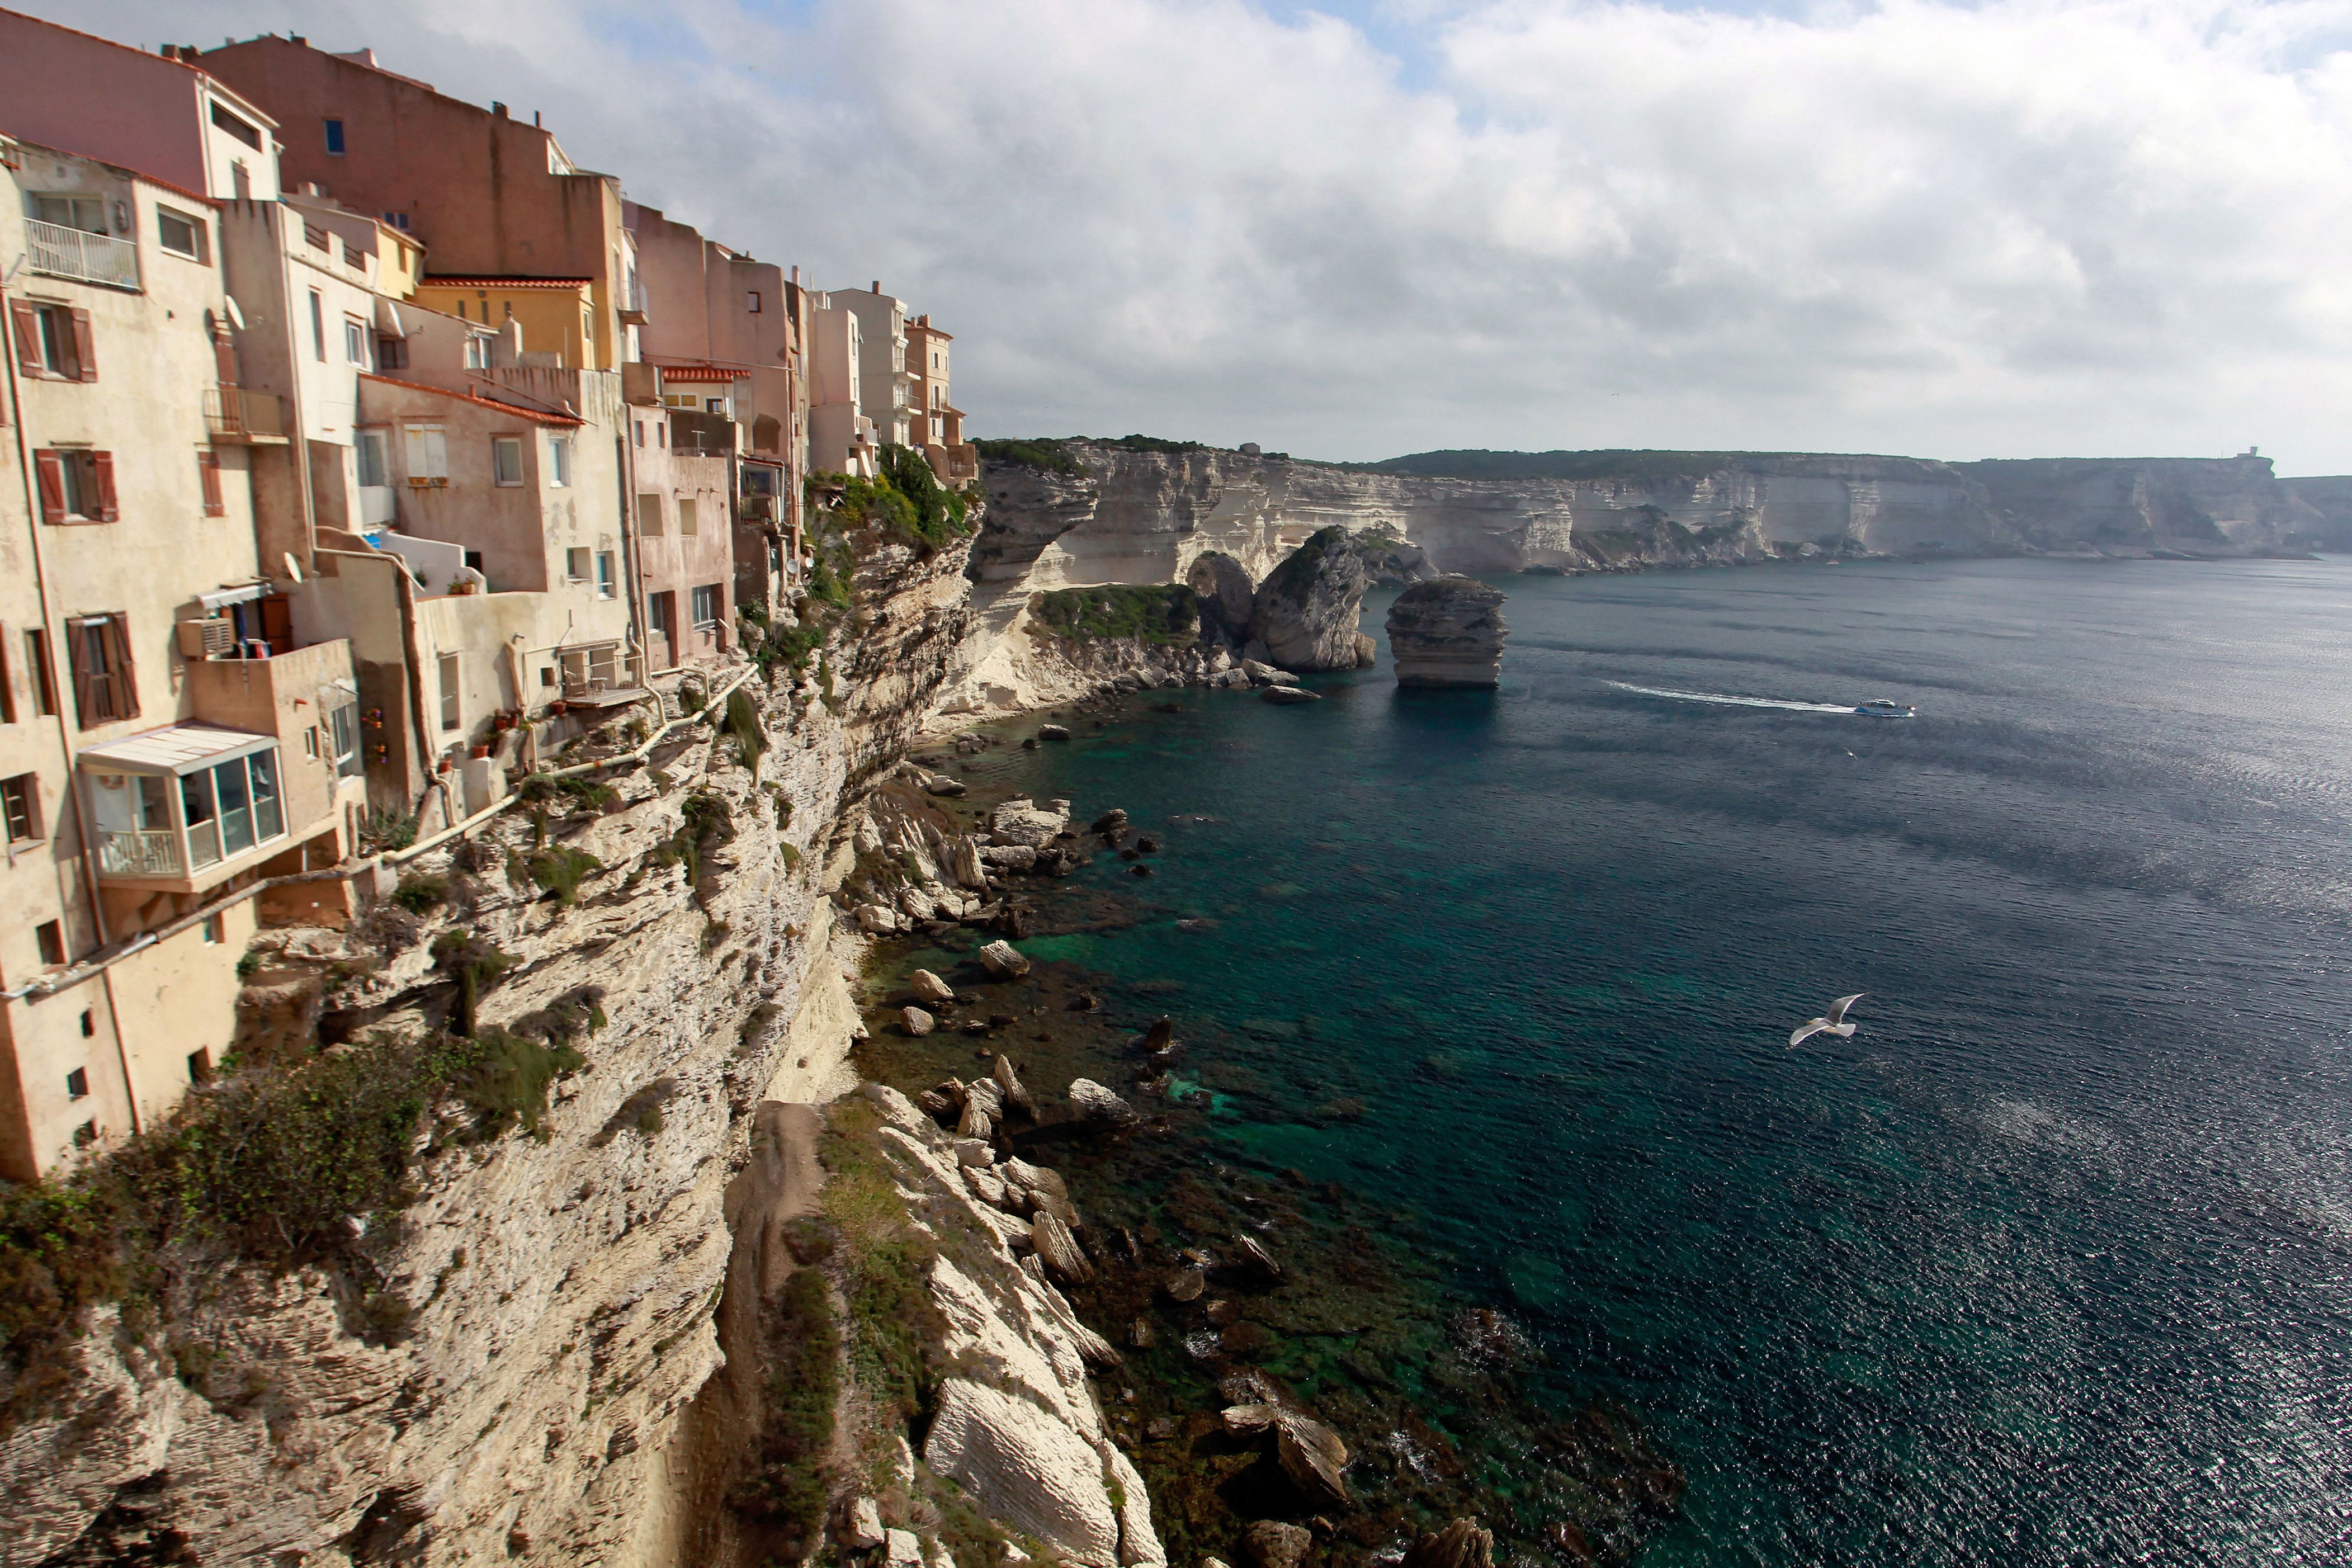 10. Cliffs of Bonifacio, France